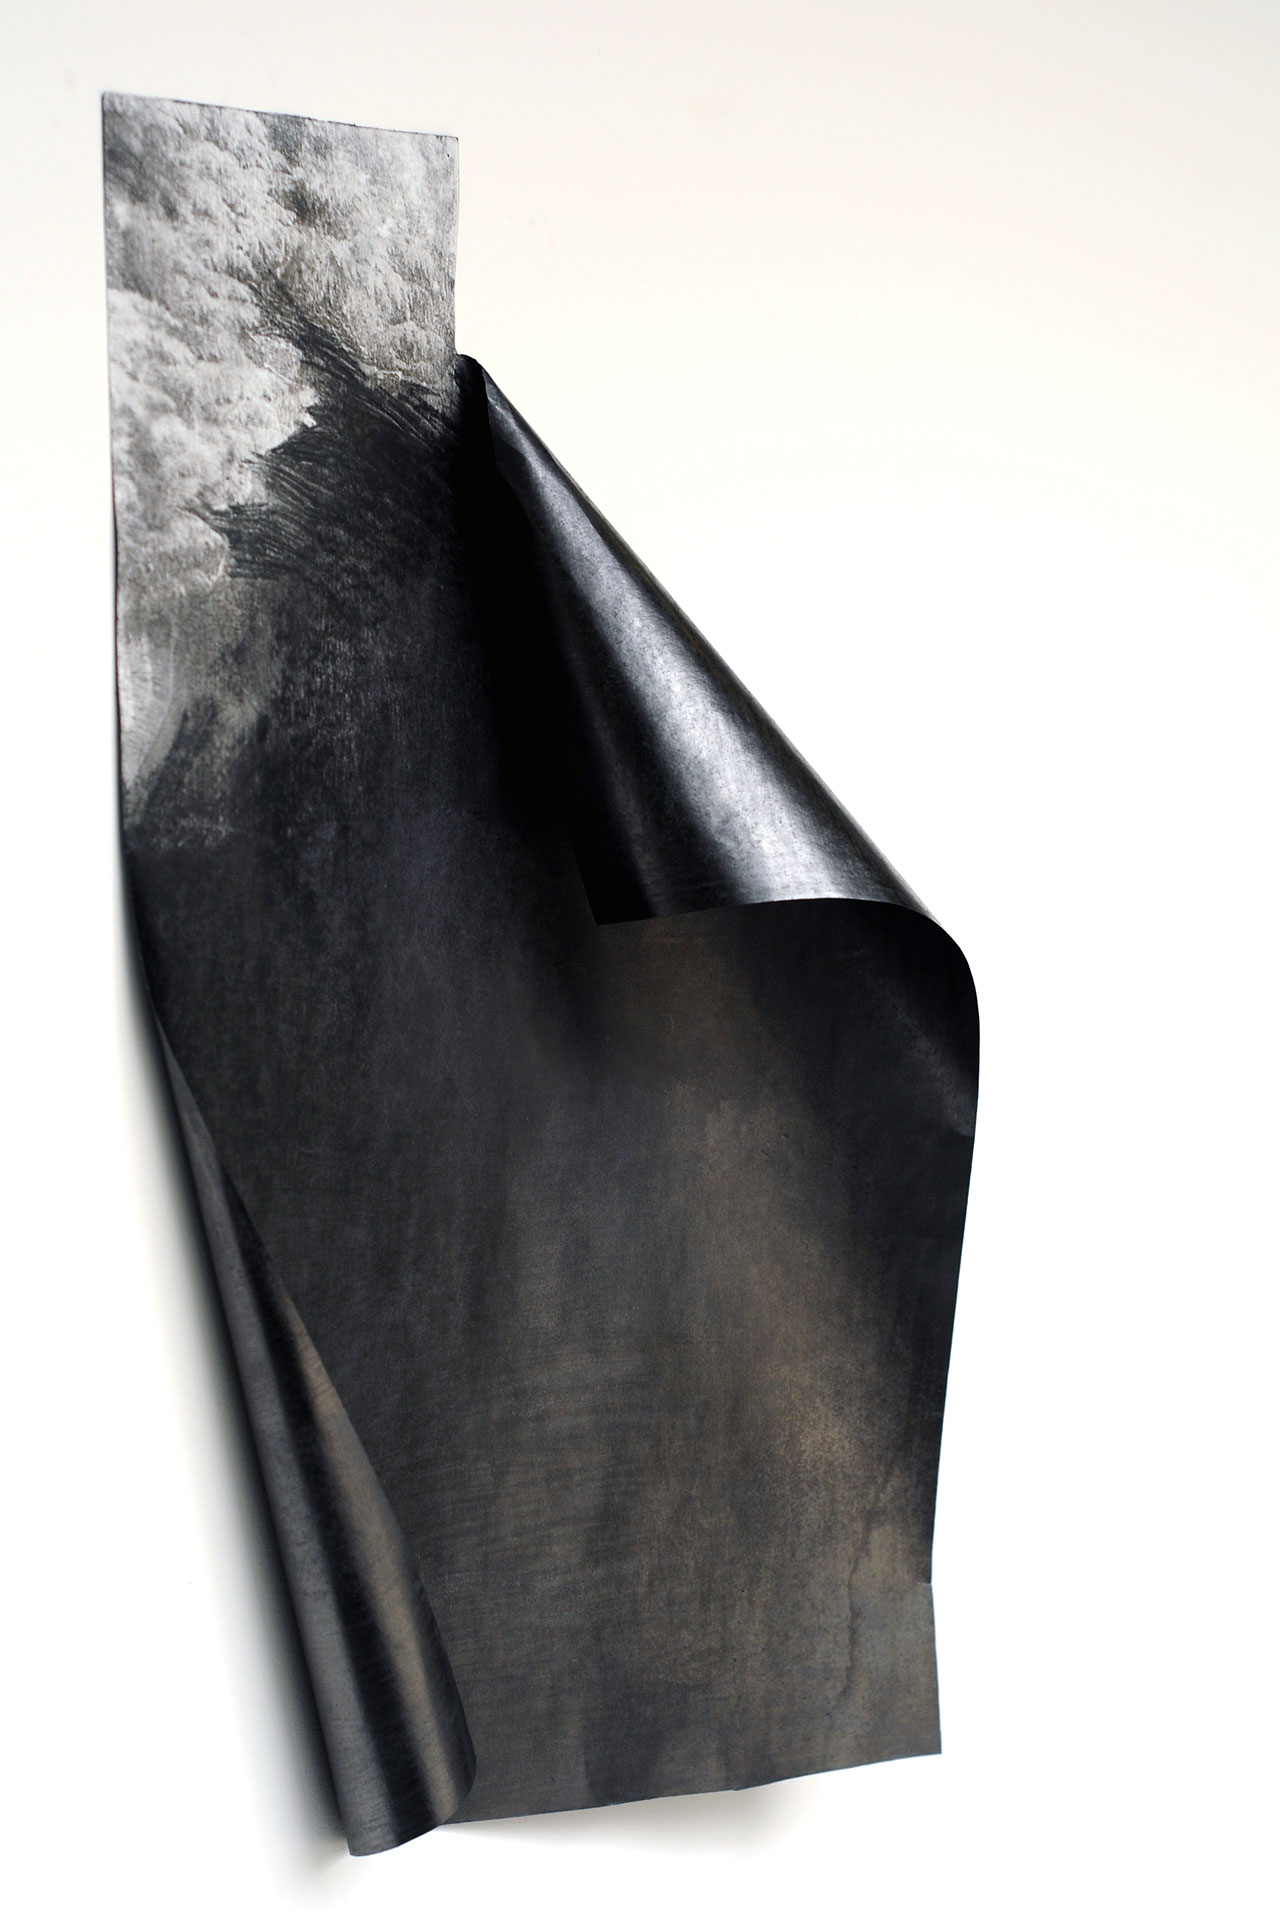 Despina Flessa, Folding landscape, graphite print and graphite on paper, 49,5 x 40 cm, 2015. Photo by Costas Christou.